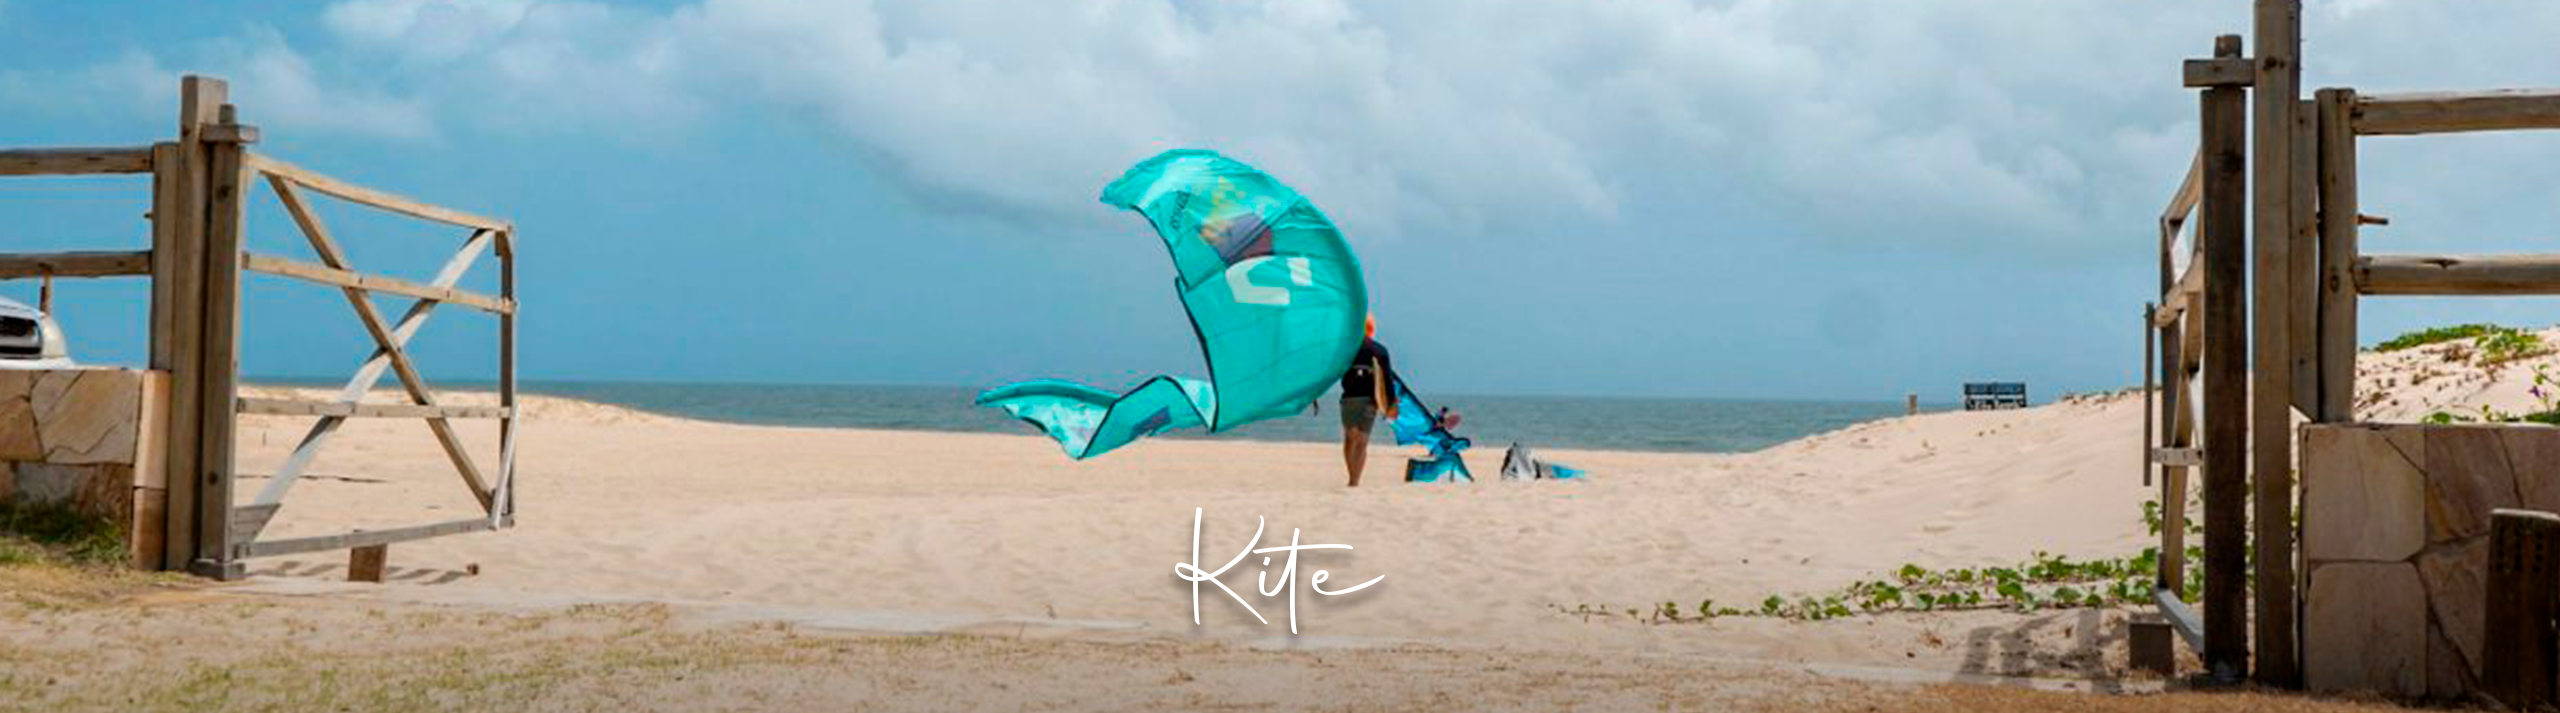 #kite